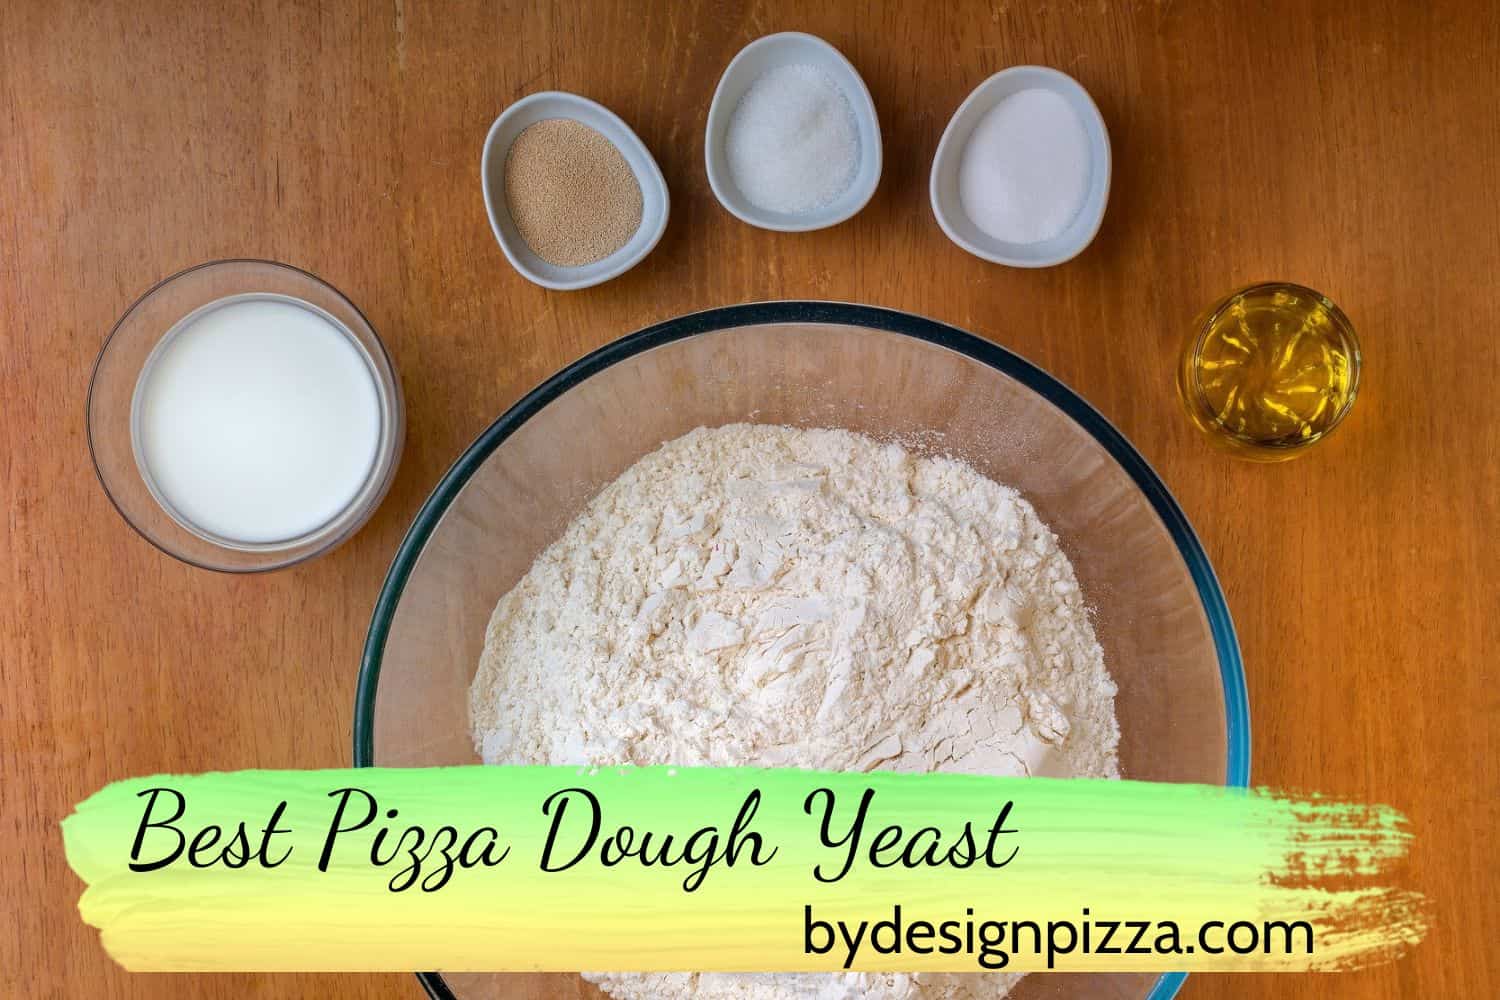 Best Pizza Dough Yeast